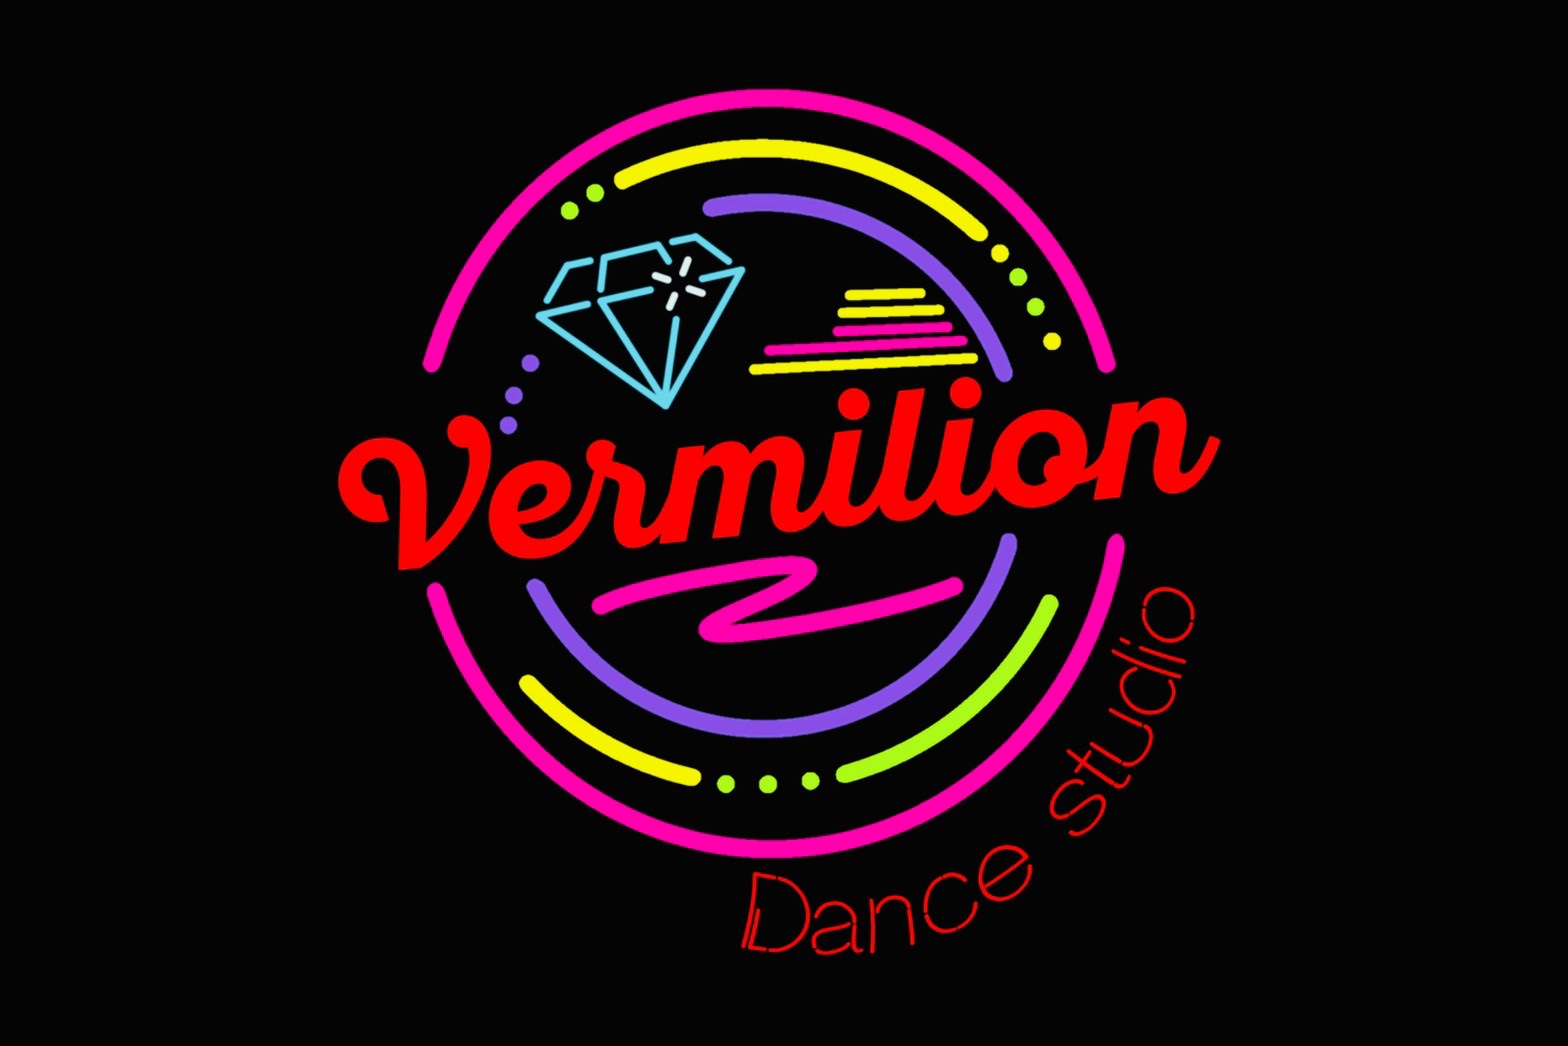 Vermilion Dance Studio 所沢校の雰囲気がわかる写真